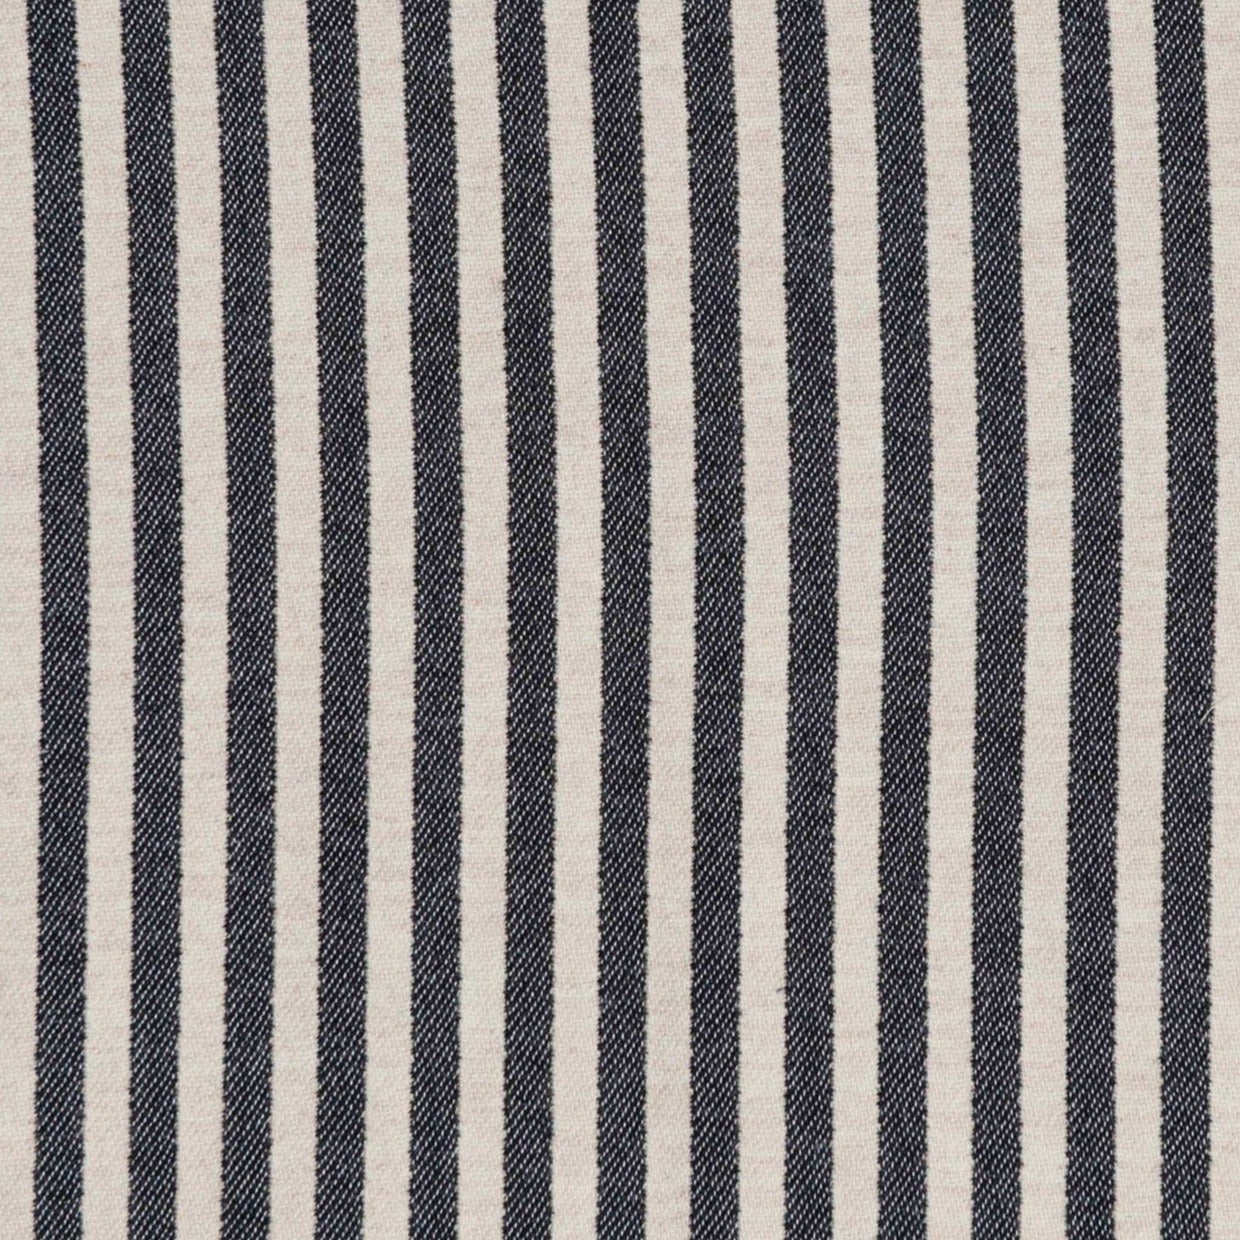 Harbour Stripe Merino Wool Fabric Black & Ecru